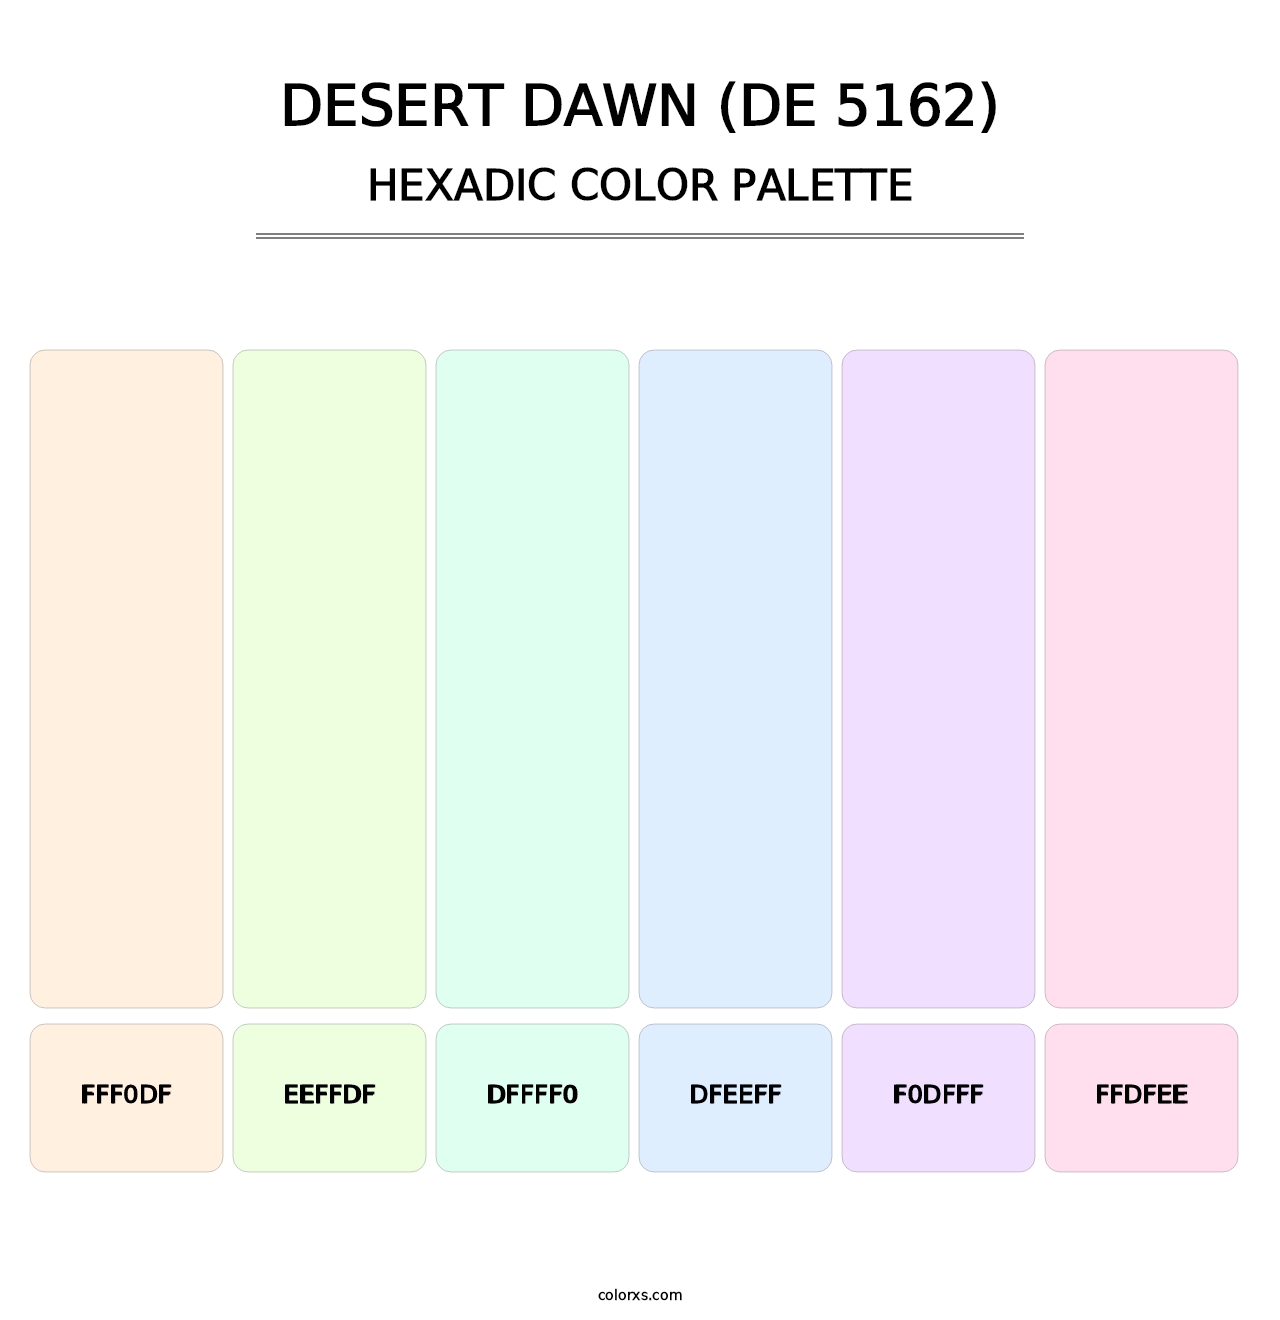 Desert Dawn (DE 5162) - Hexadic Color Palette